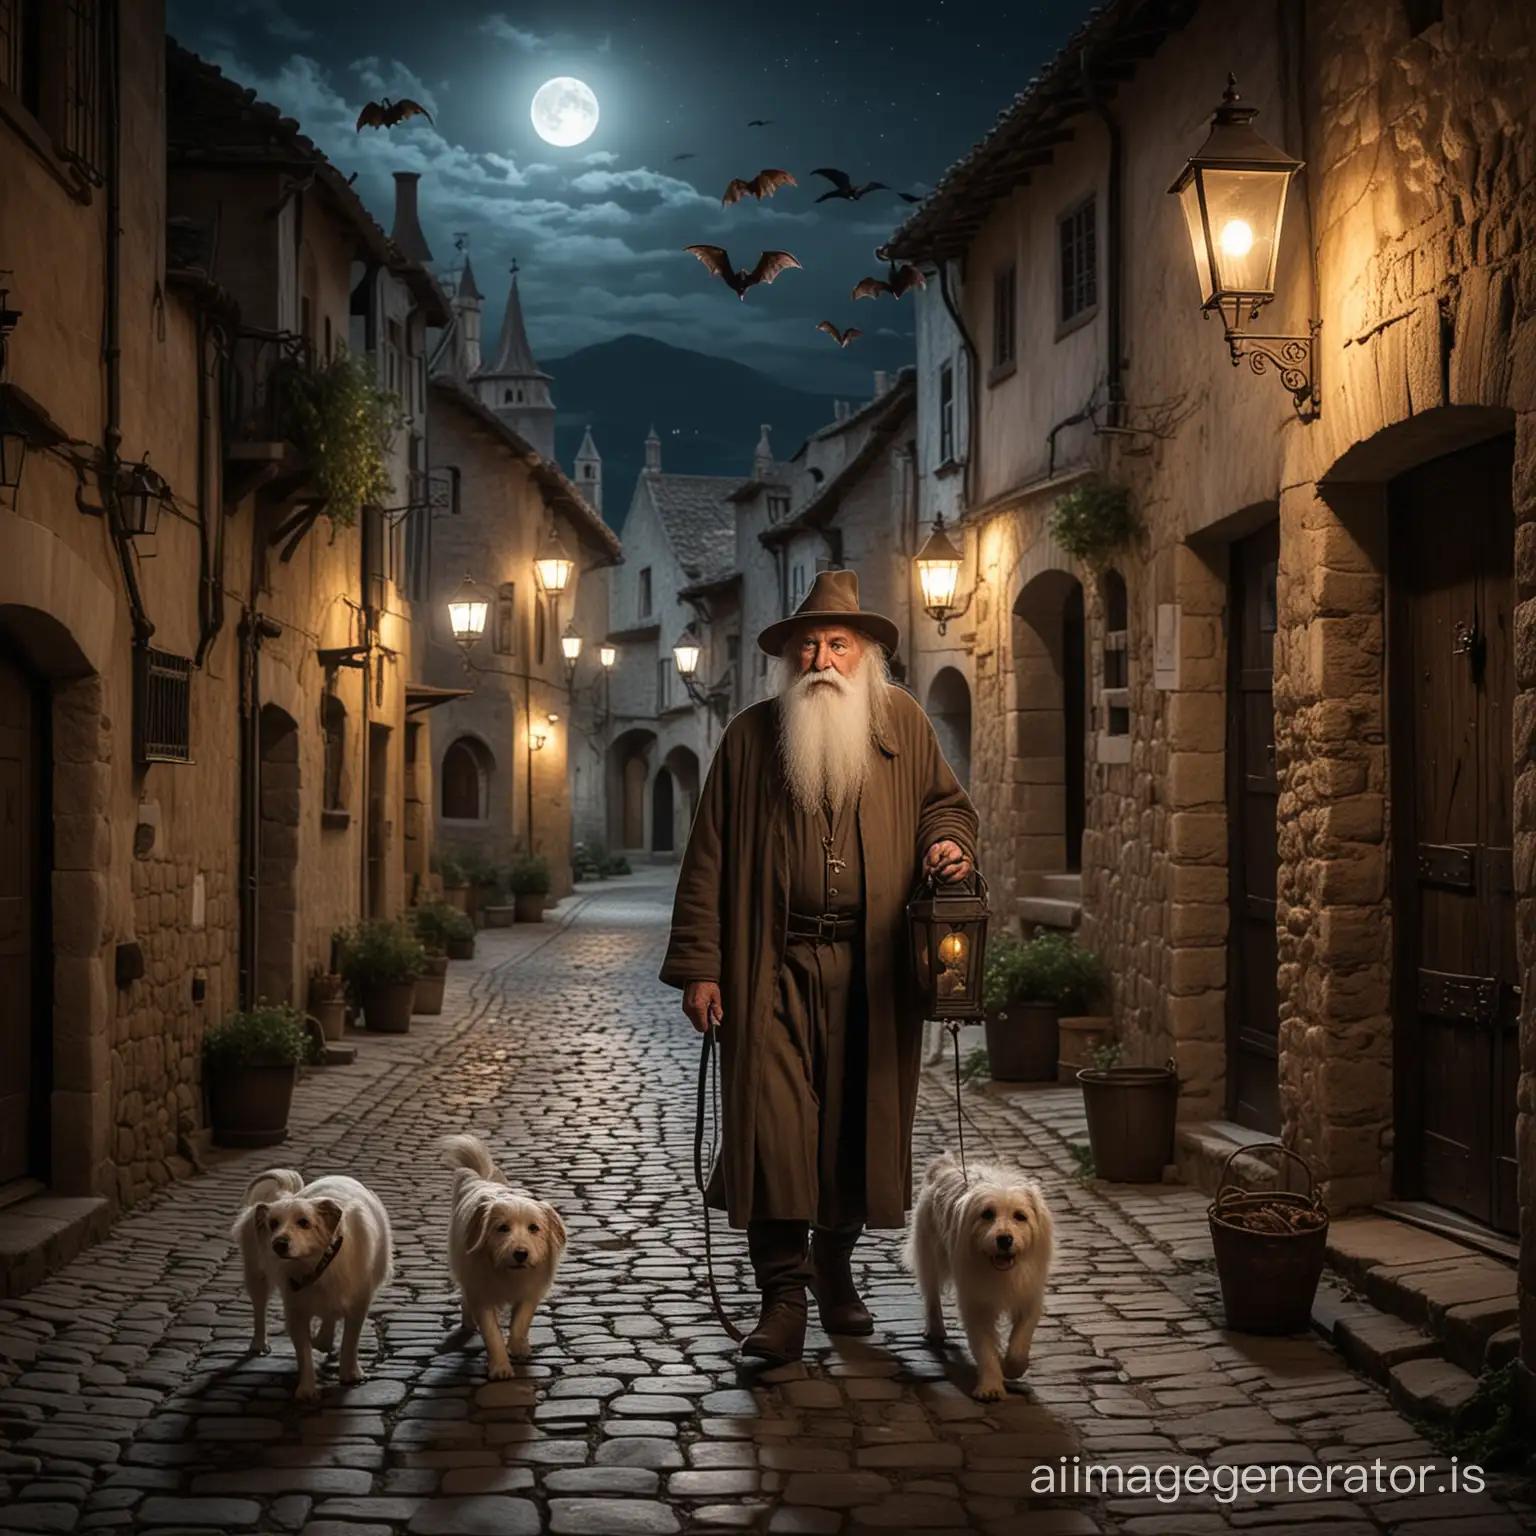 Old-Man-with-White-Beard-Walking-in-Medieval-Village-at-Night